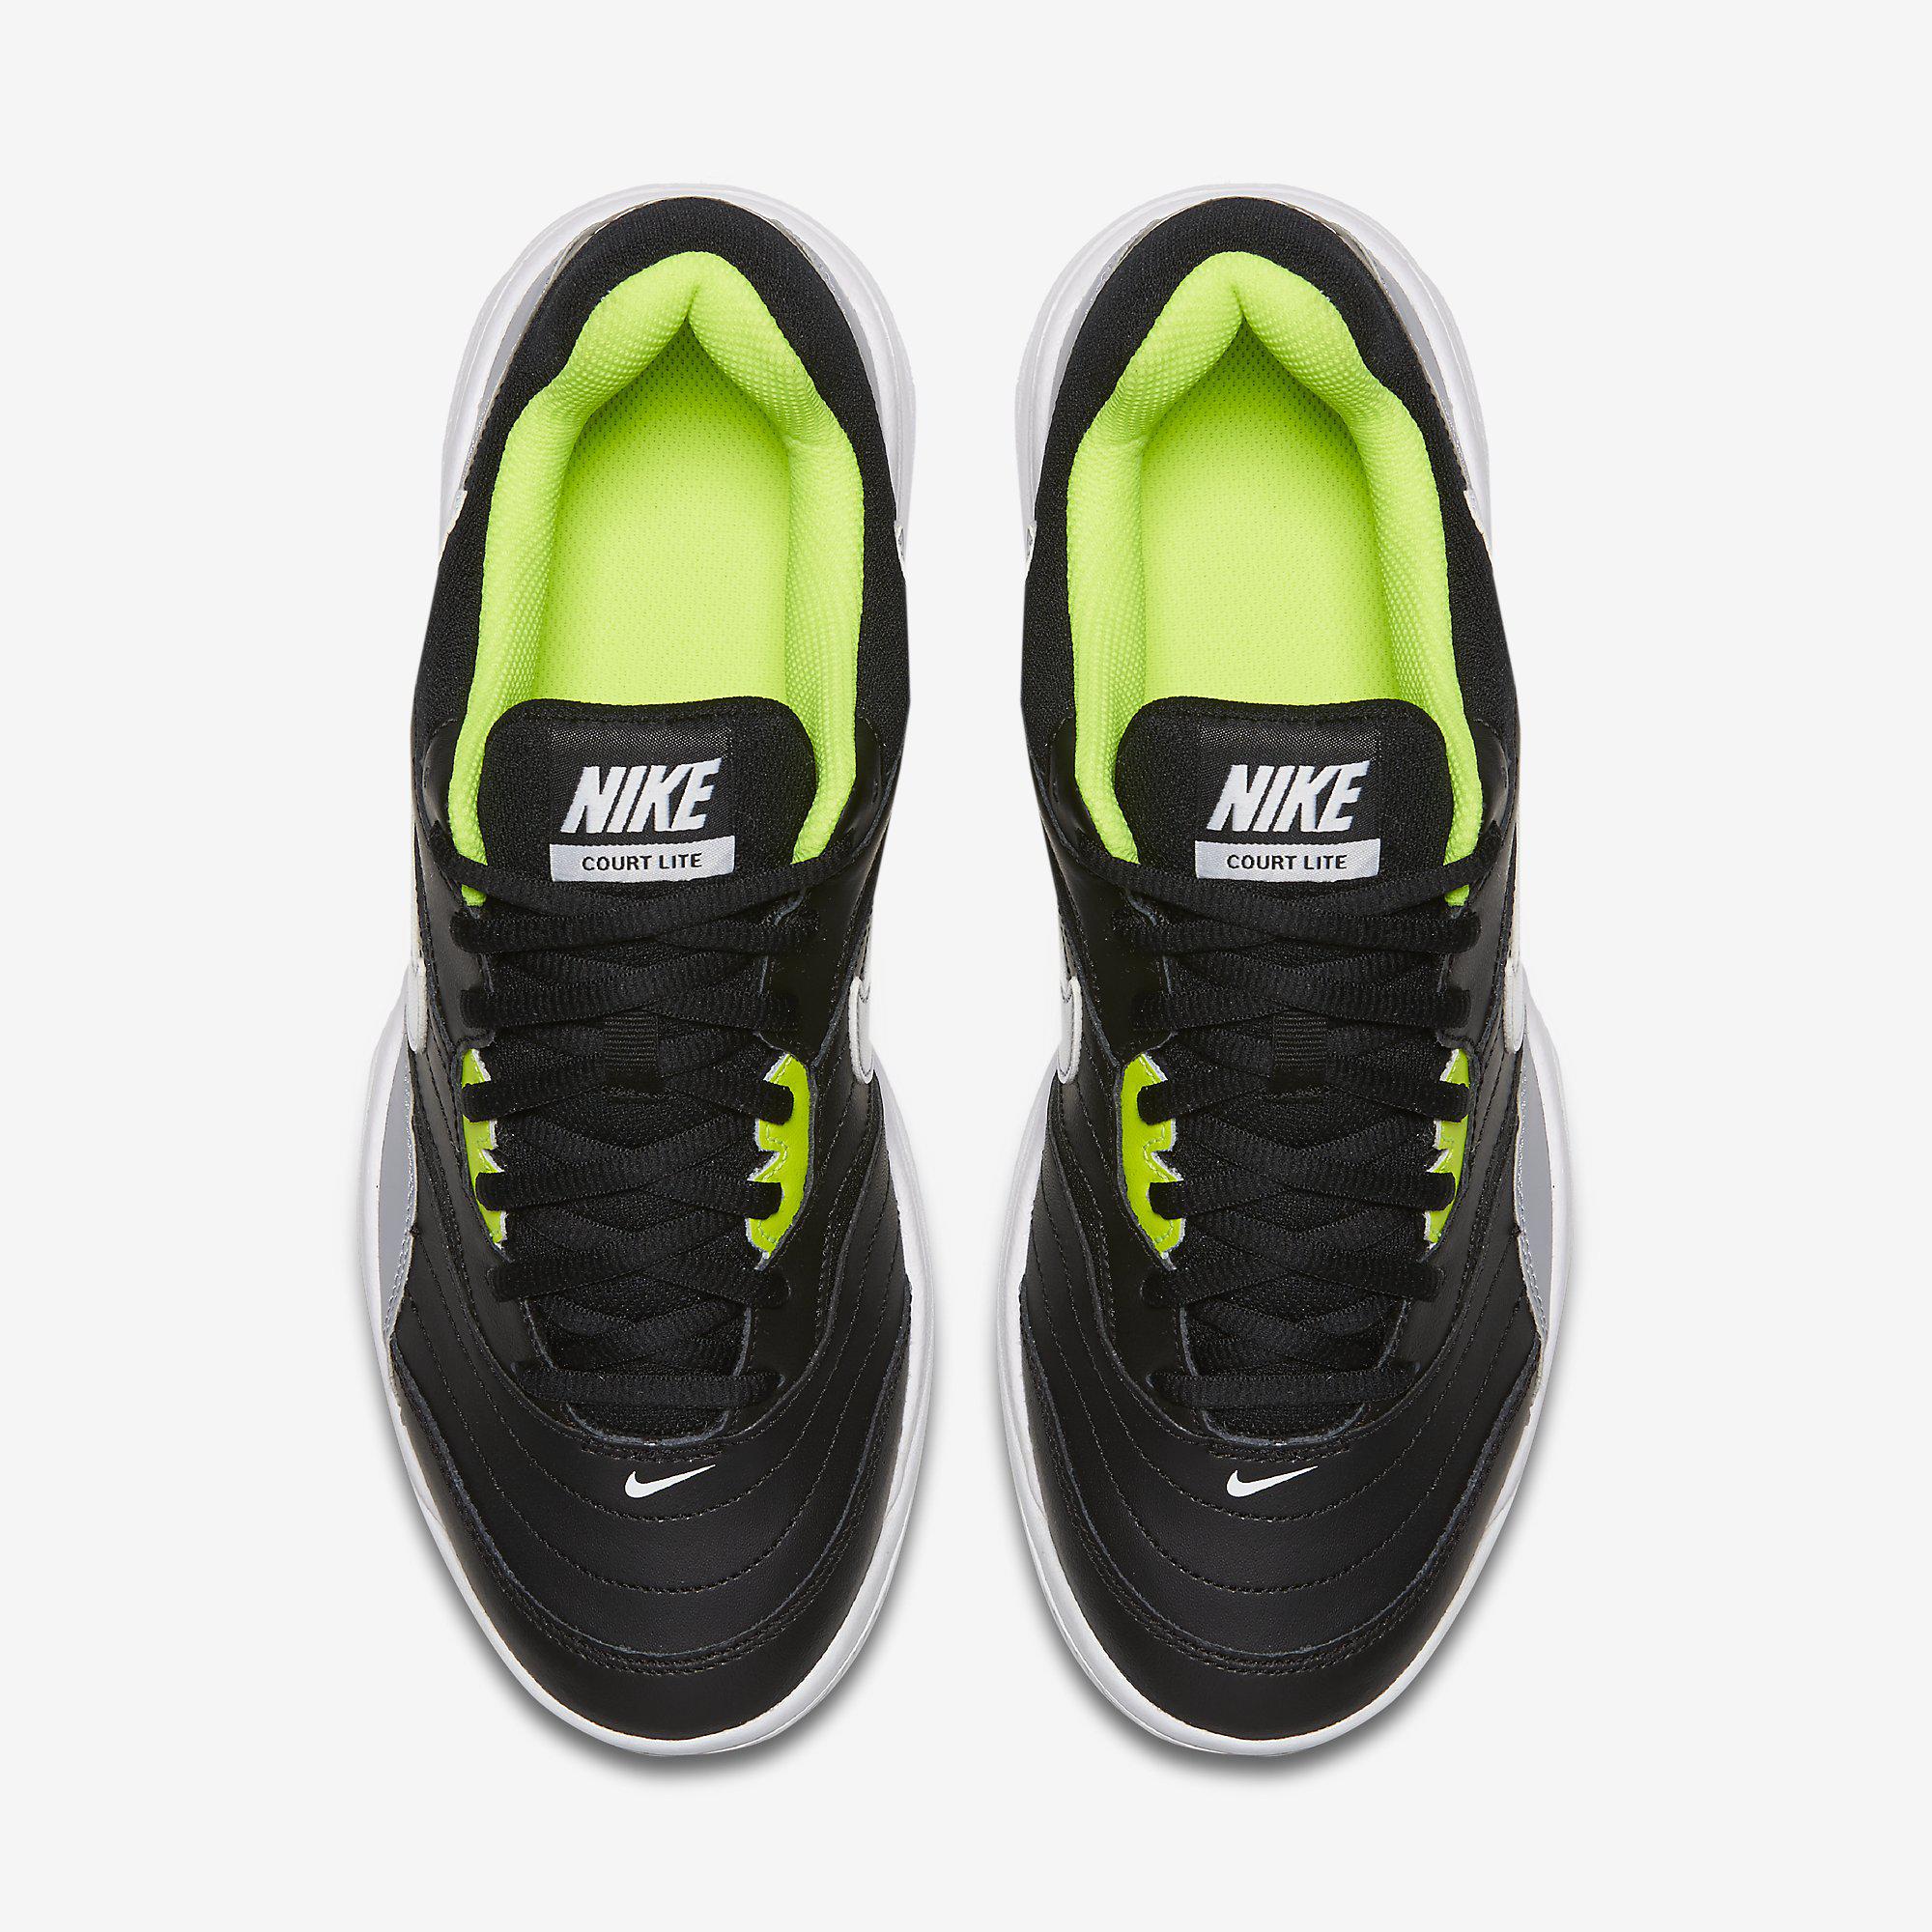 Nike Mens Court Lite Tennis Shoes Black/Grey